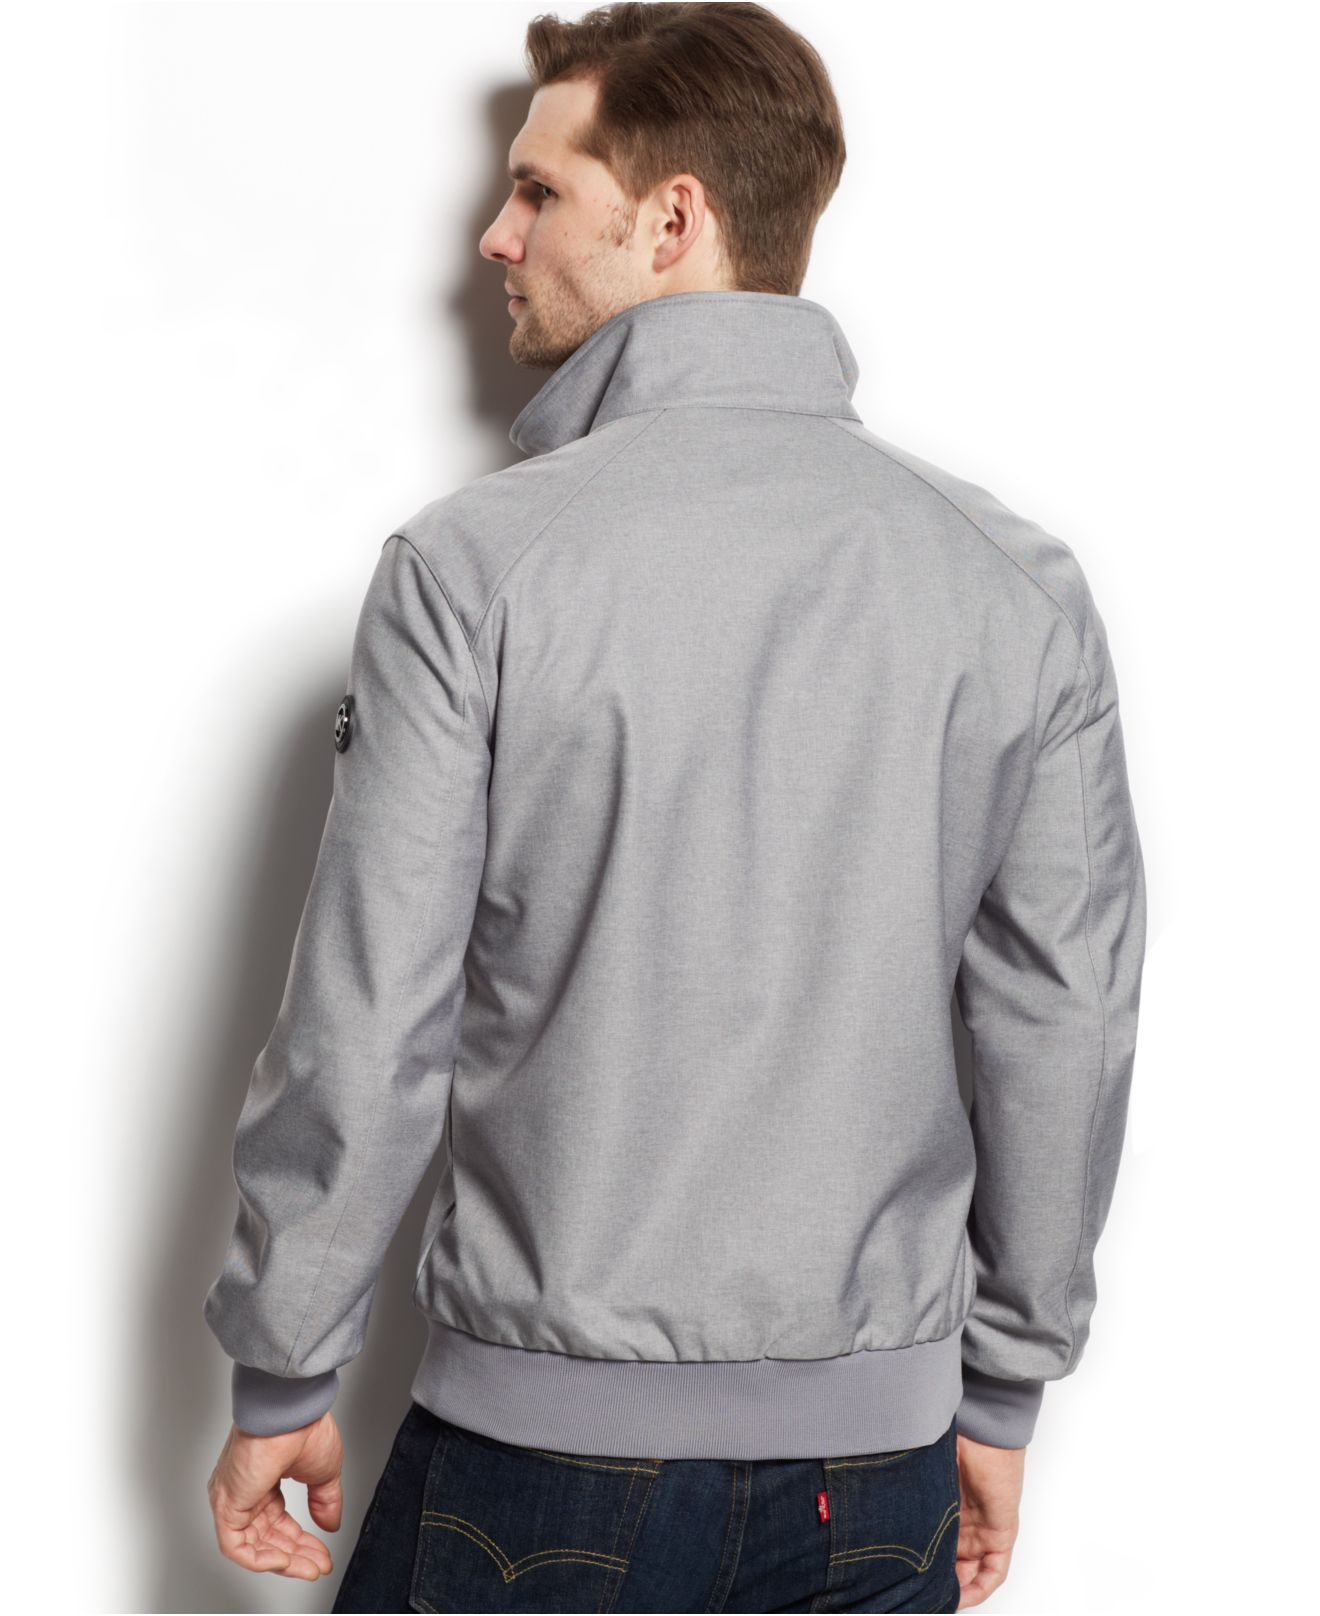 michael kors heather grey jacket